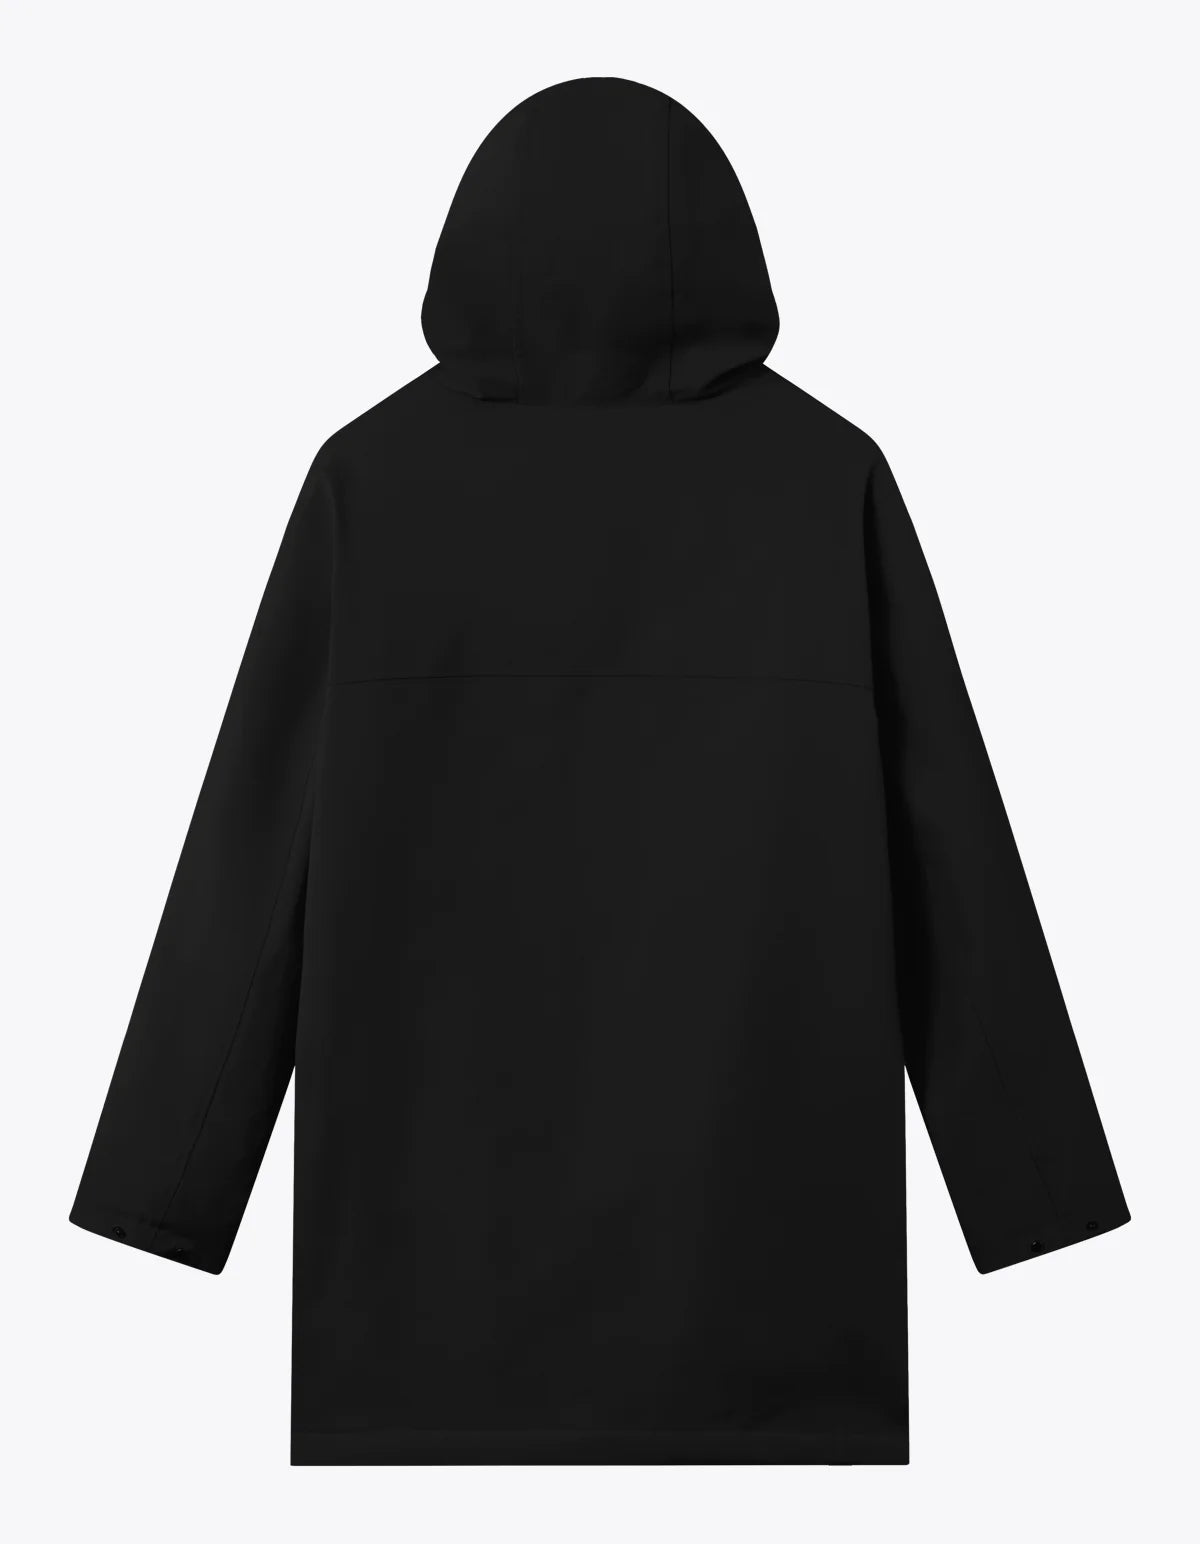 Malone Coat 2.0 - Black